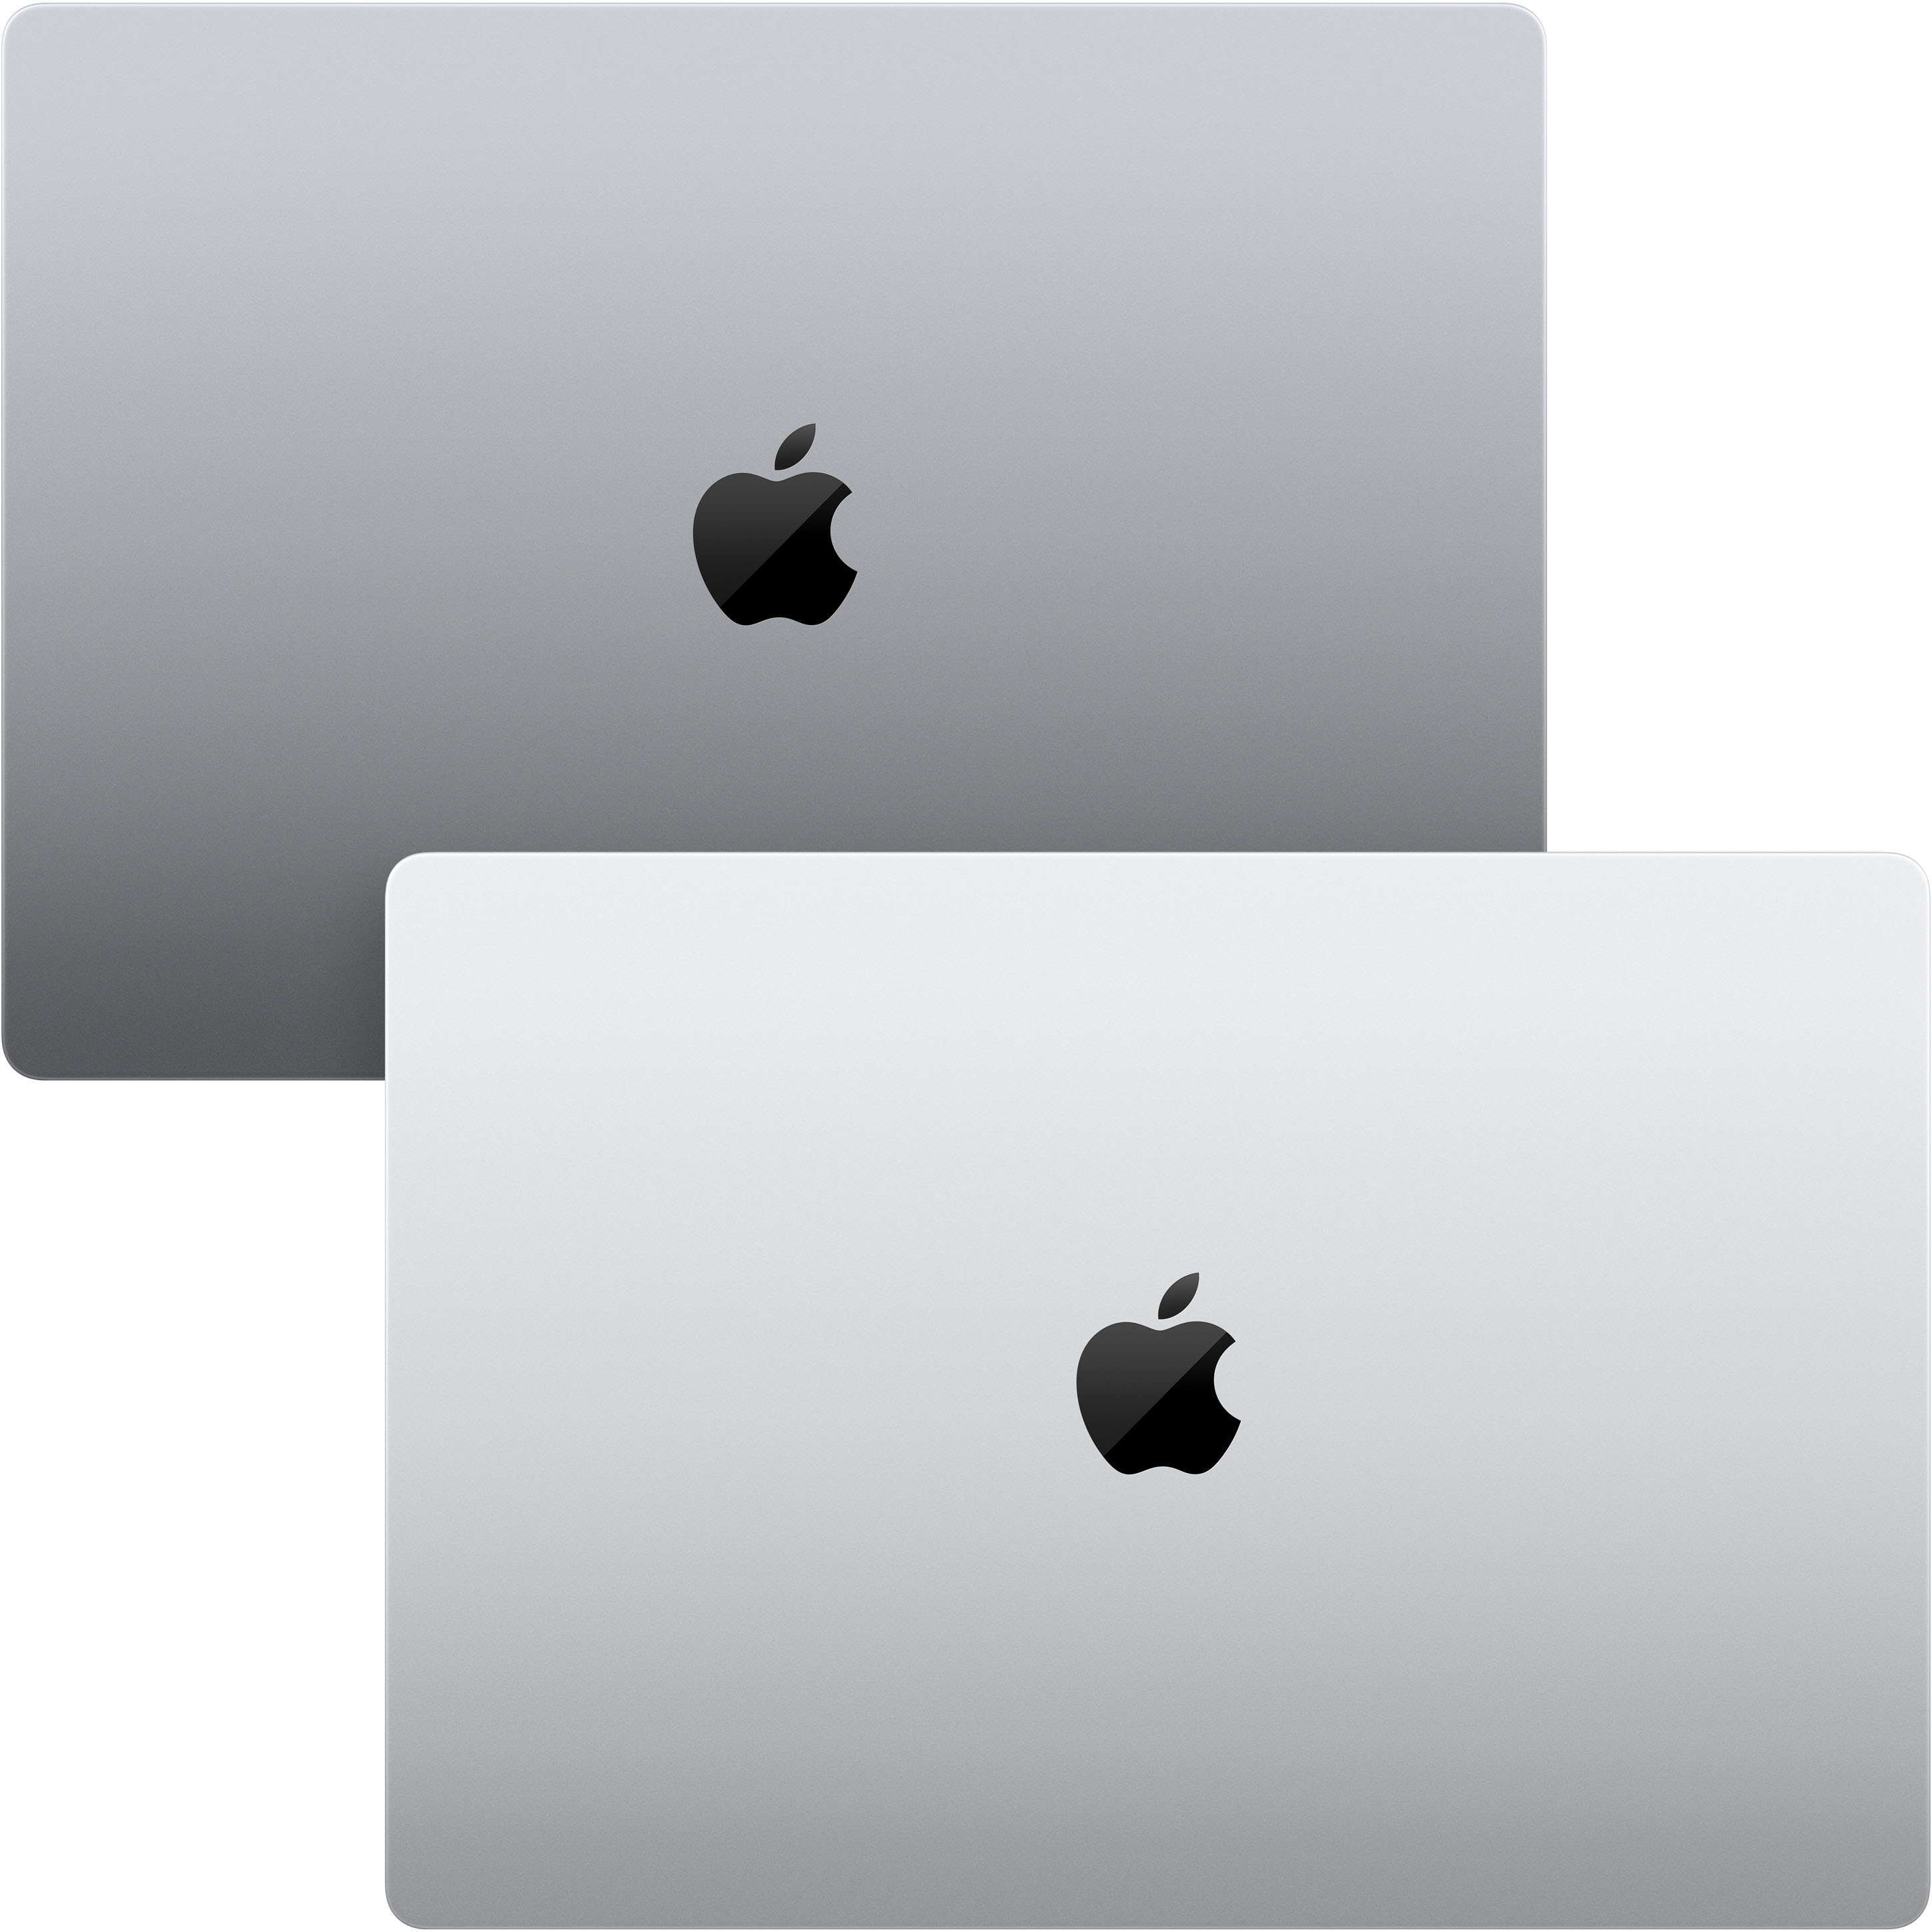 MacBook Pro 16" Laptop Apple M1 Pro chip Memory 512GB (Latest Model) Space Gray MK183LL/A - Best Buy